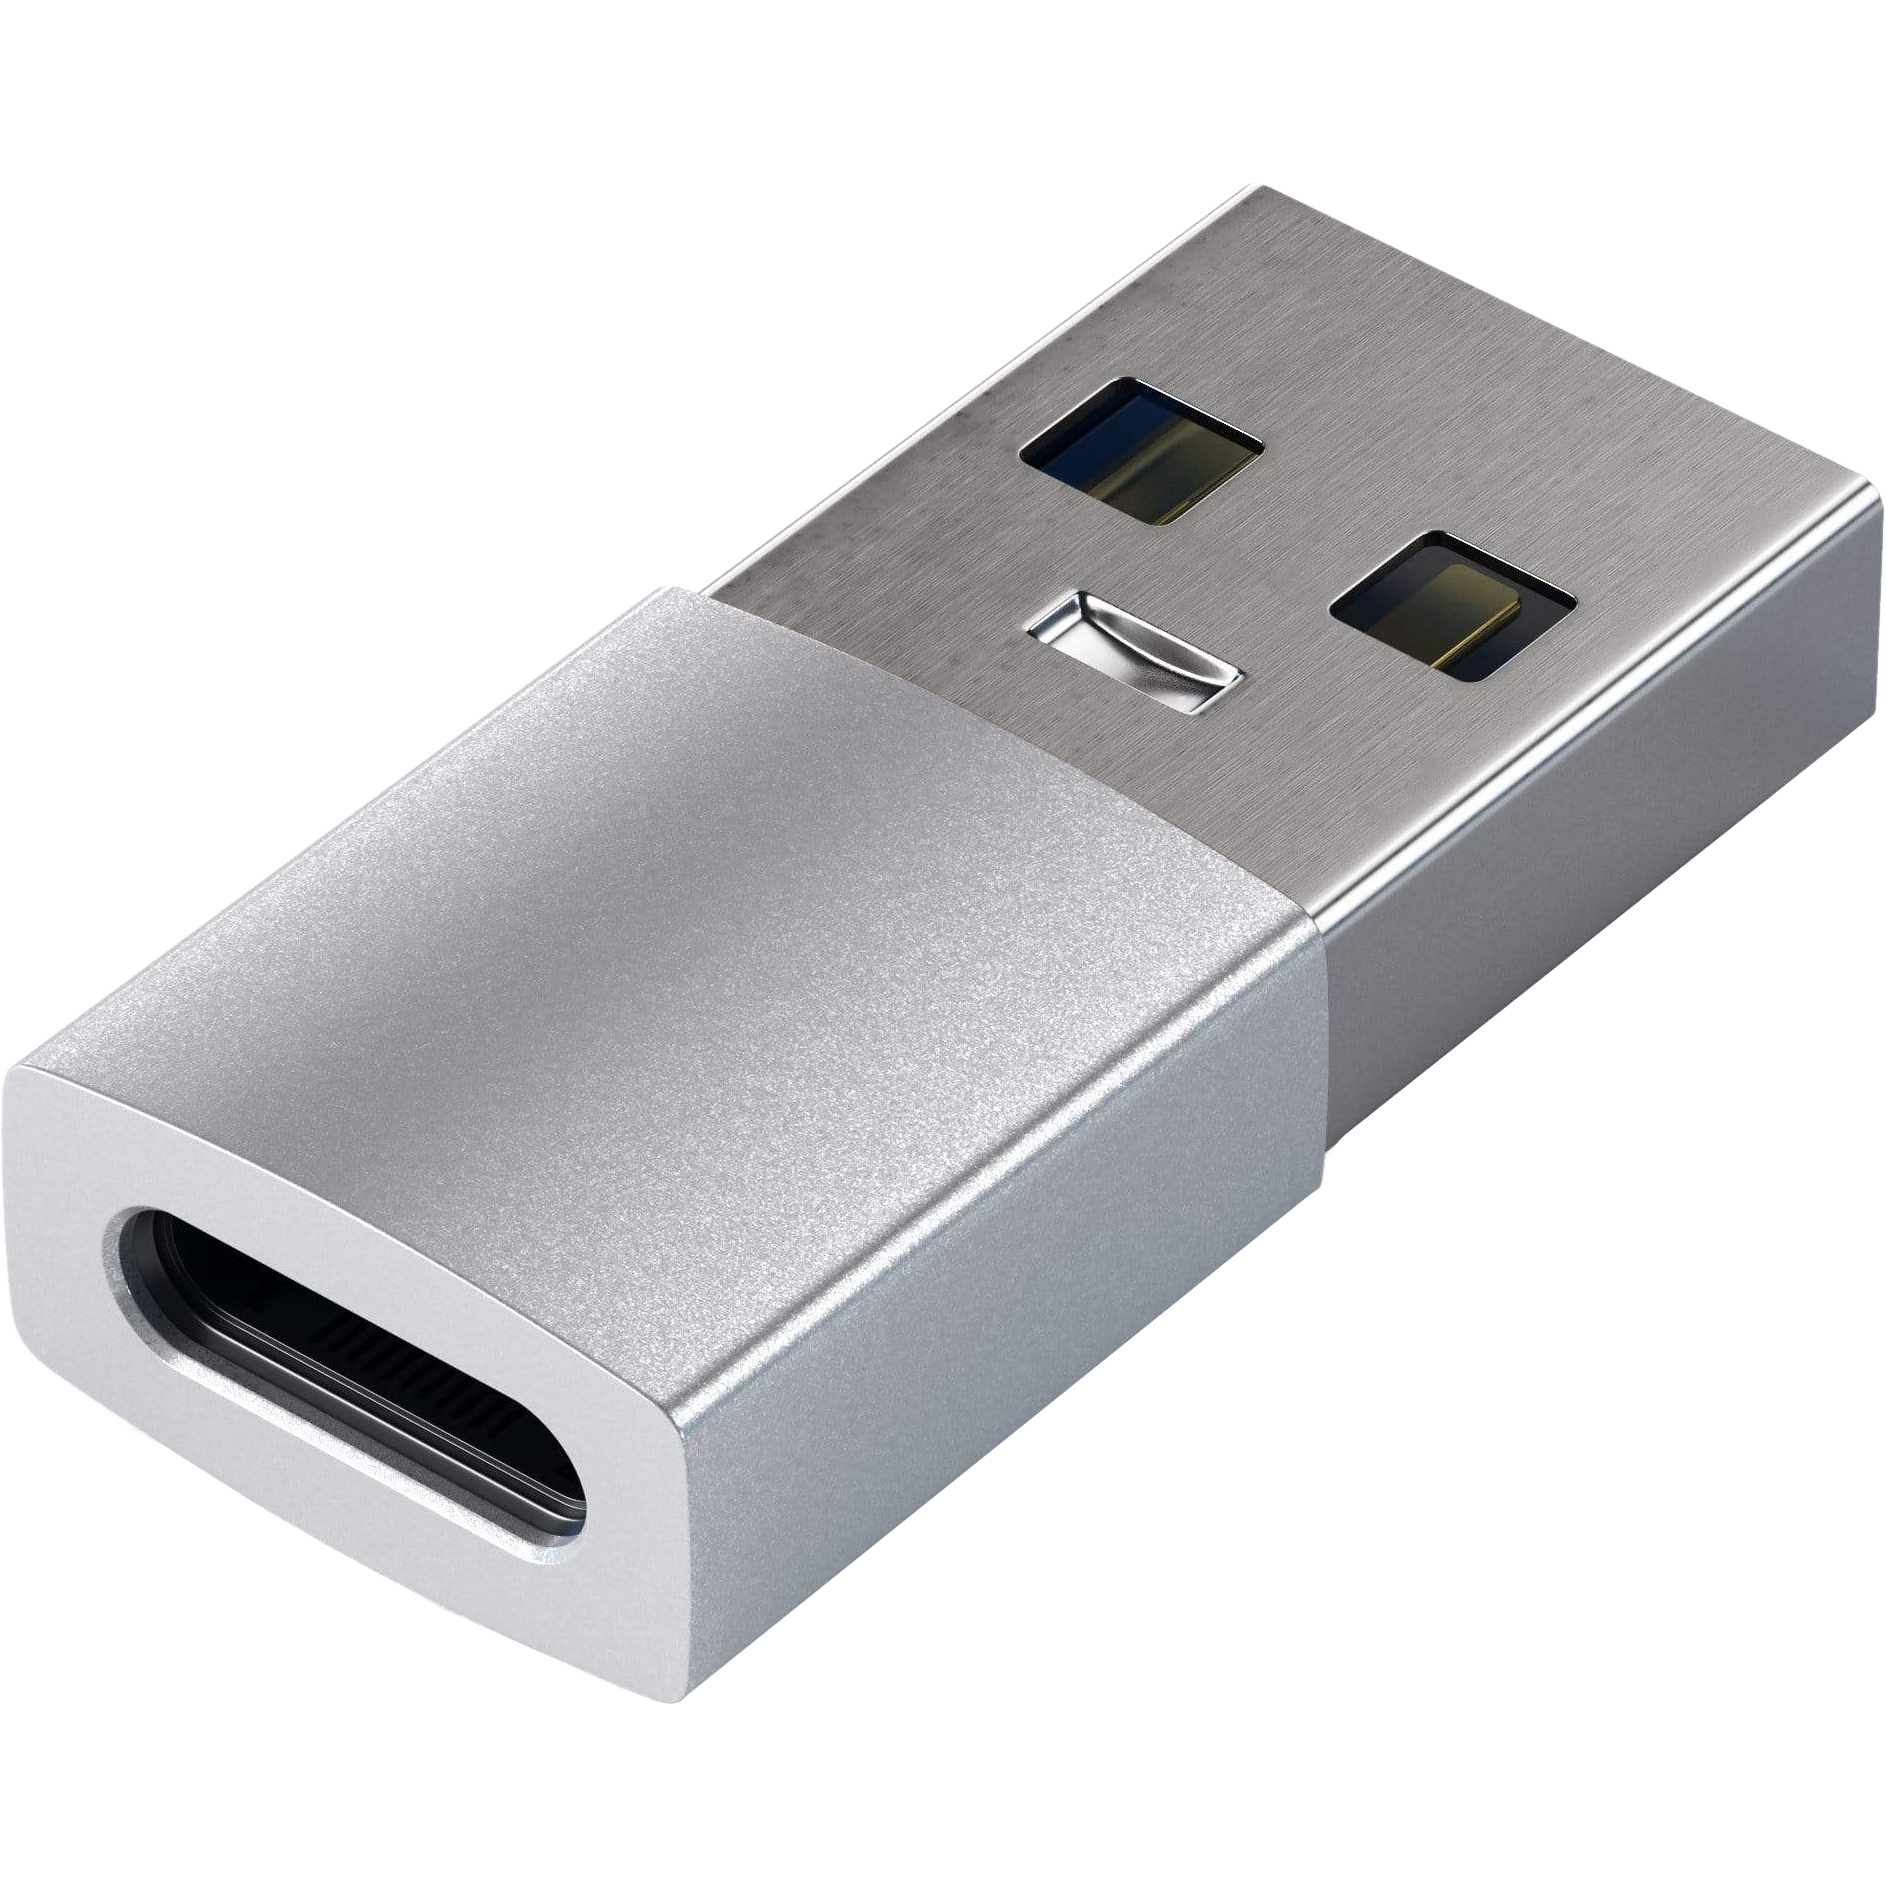 Переходник Satechi USB Type-A to Type-C серебристый серебристый переходник usb type c to aux